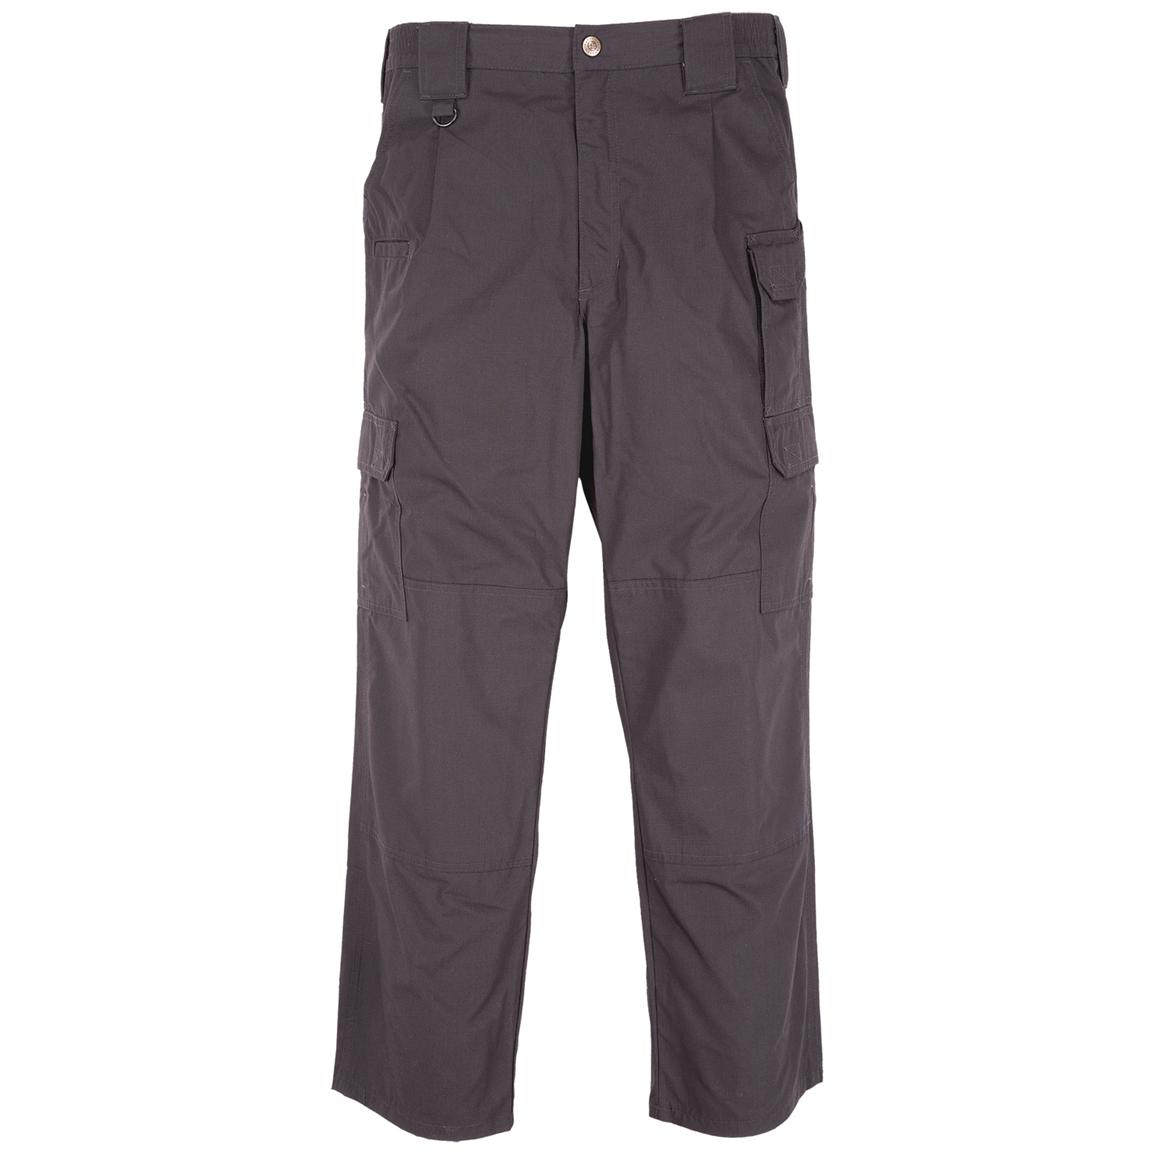 Men's 5.11 Tactical Taclite Pro Pants - 230799, Tactical Clothing at ...